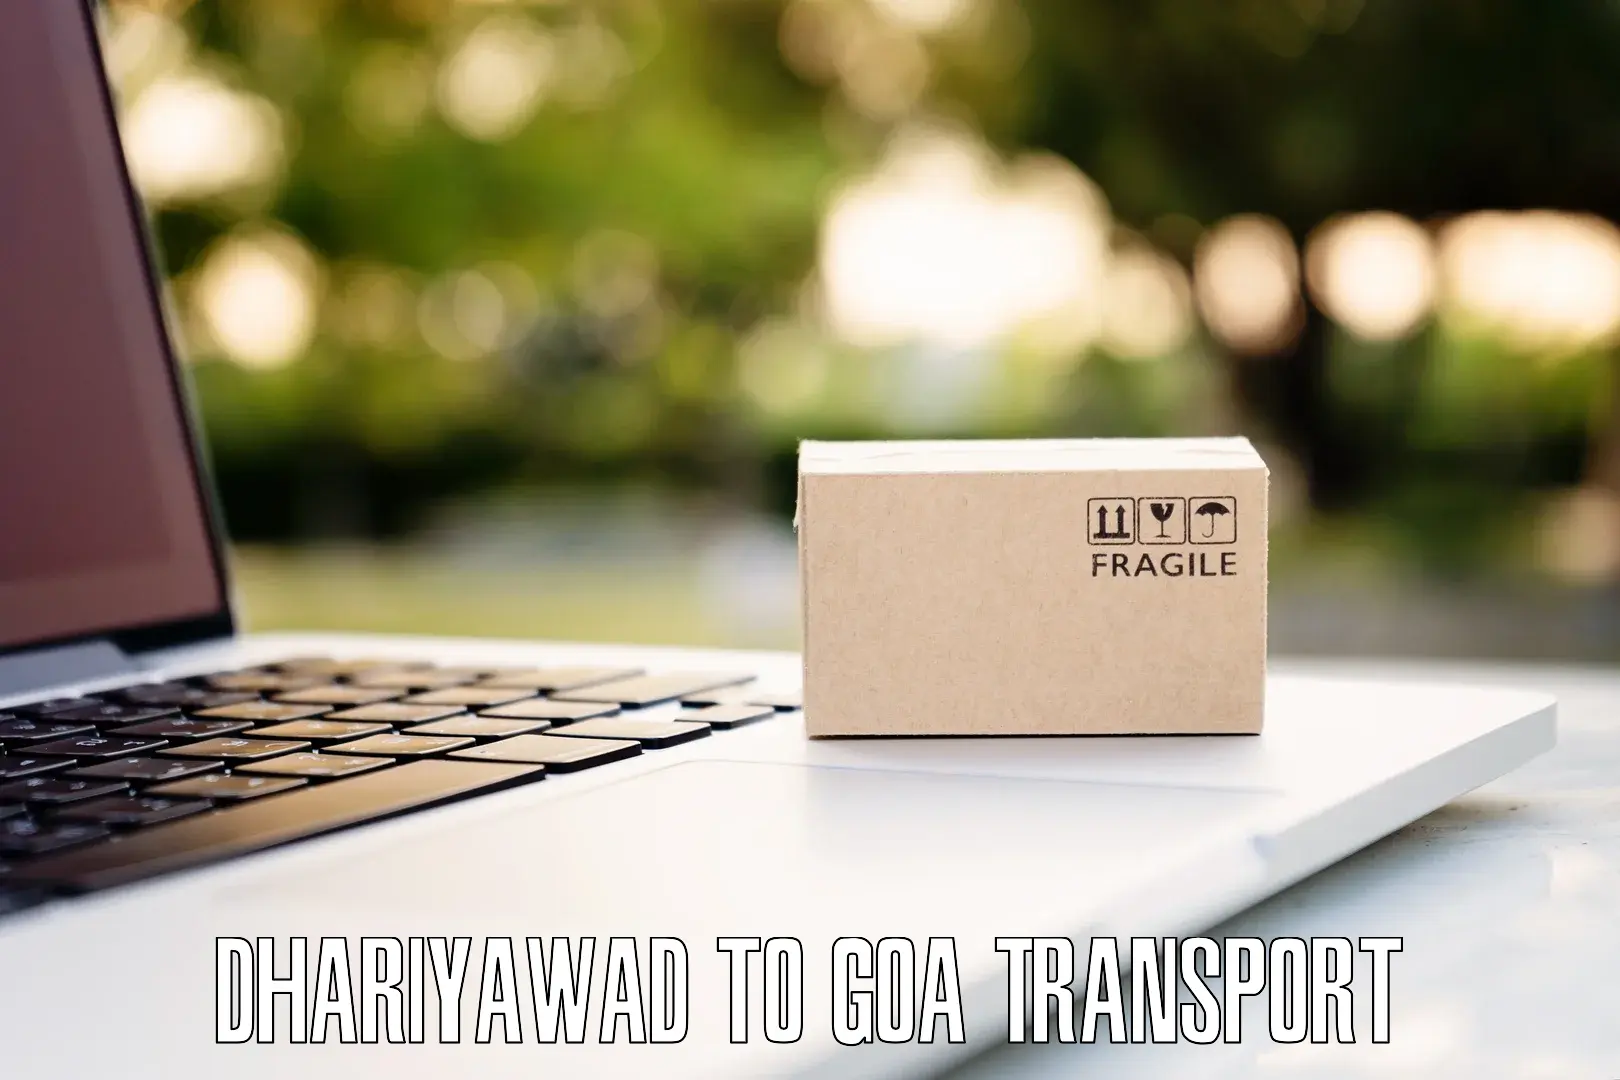 Transport in sharing Dhariyawad to Goa